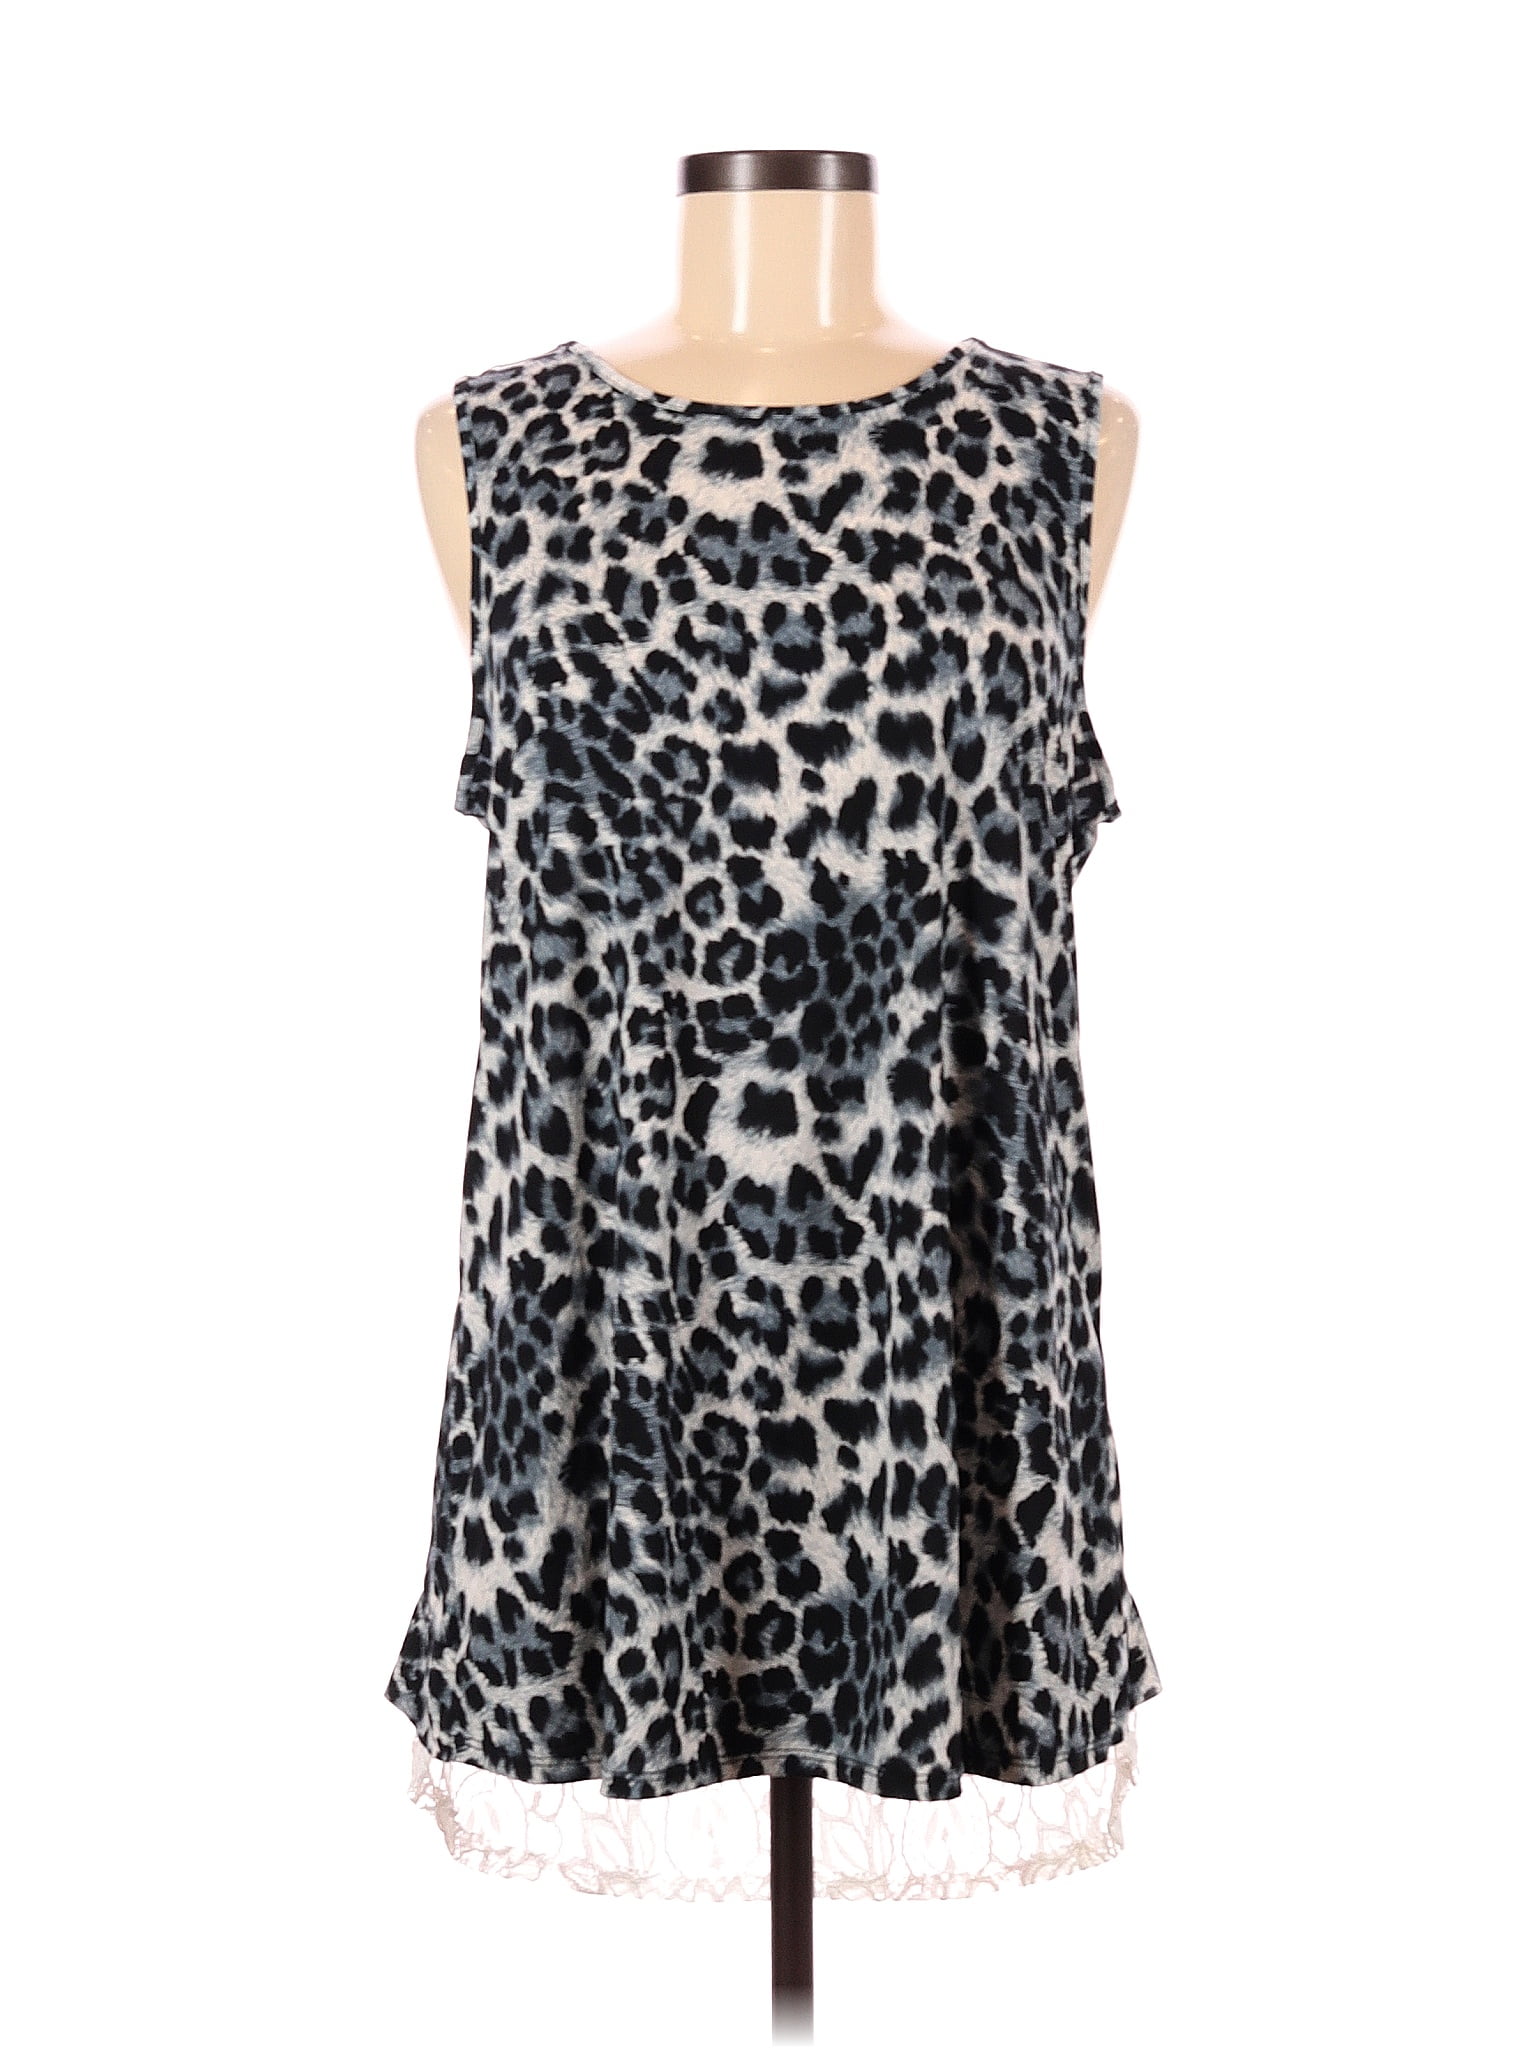 Heimish U.S.A Leopard Print Multi Color Black Sleeveless Blouse Size M ...